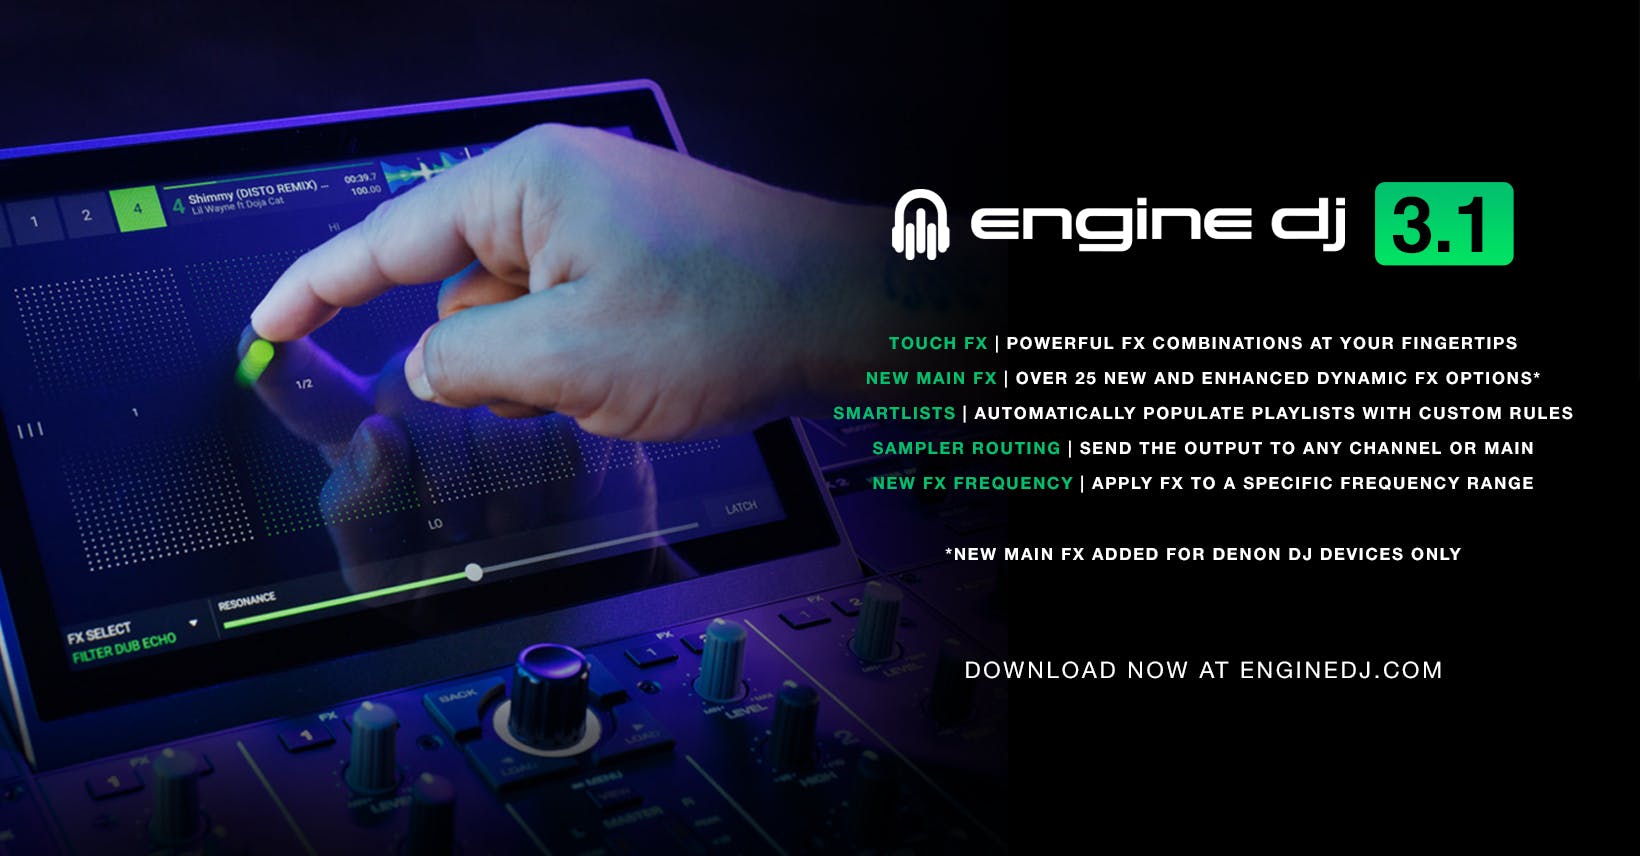 Engine DJ 3.1 add Touch FX, over 25 new fx, Smartlists